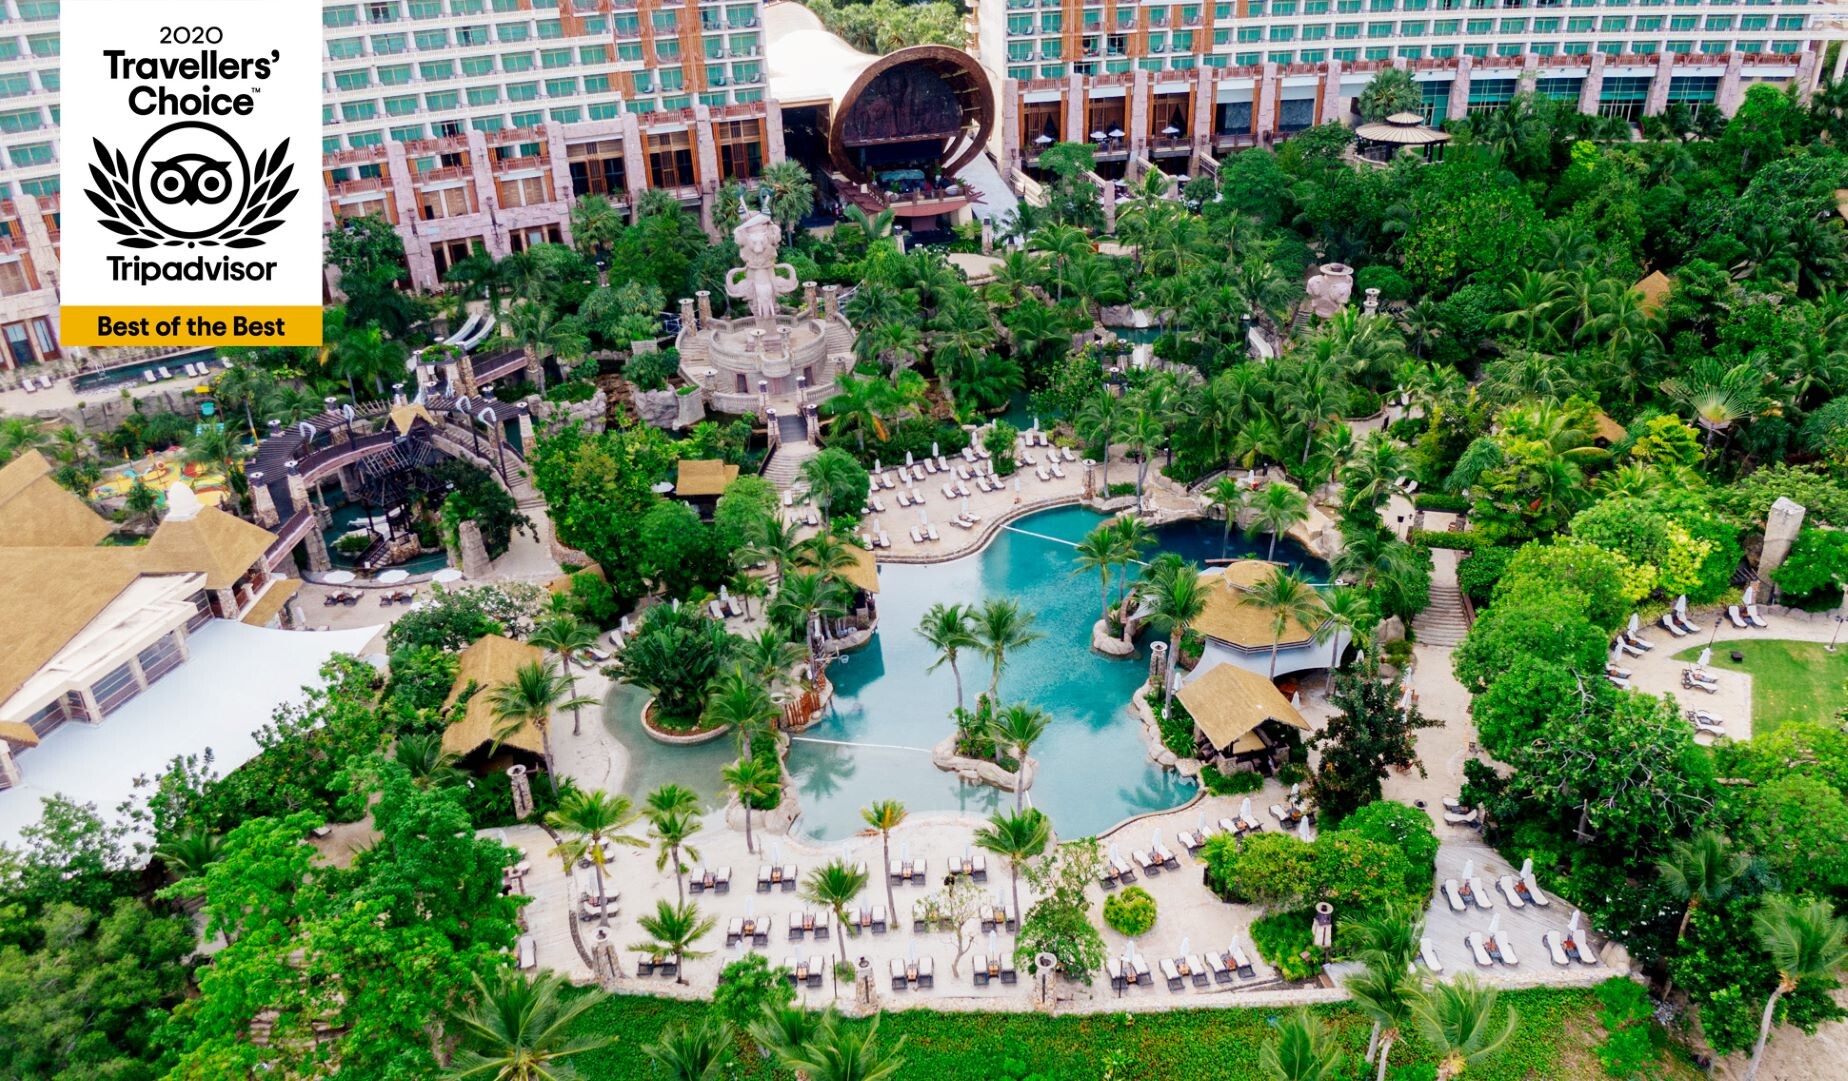 Centara Grand Mirage Beach Resort Pattaya in Top 25 Family Hotels Travelers' Choice Best of the Best award in Thailand 2020